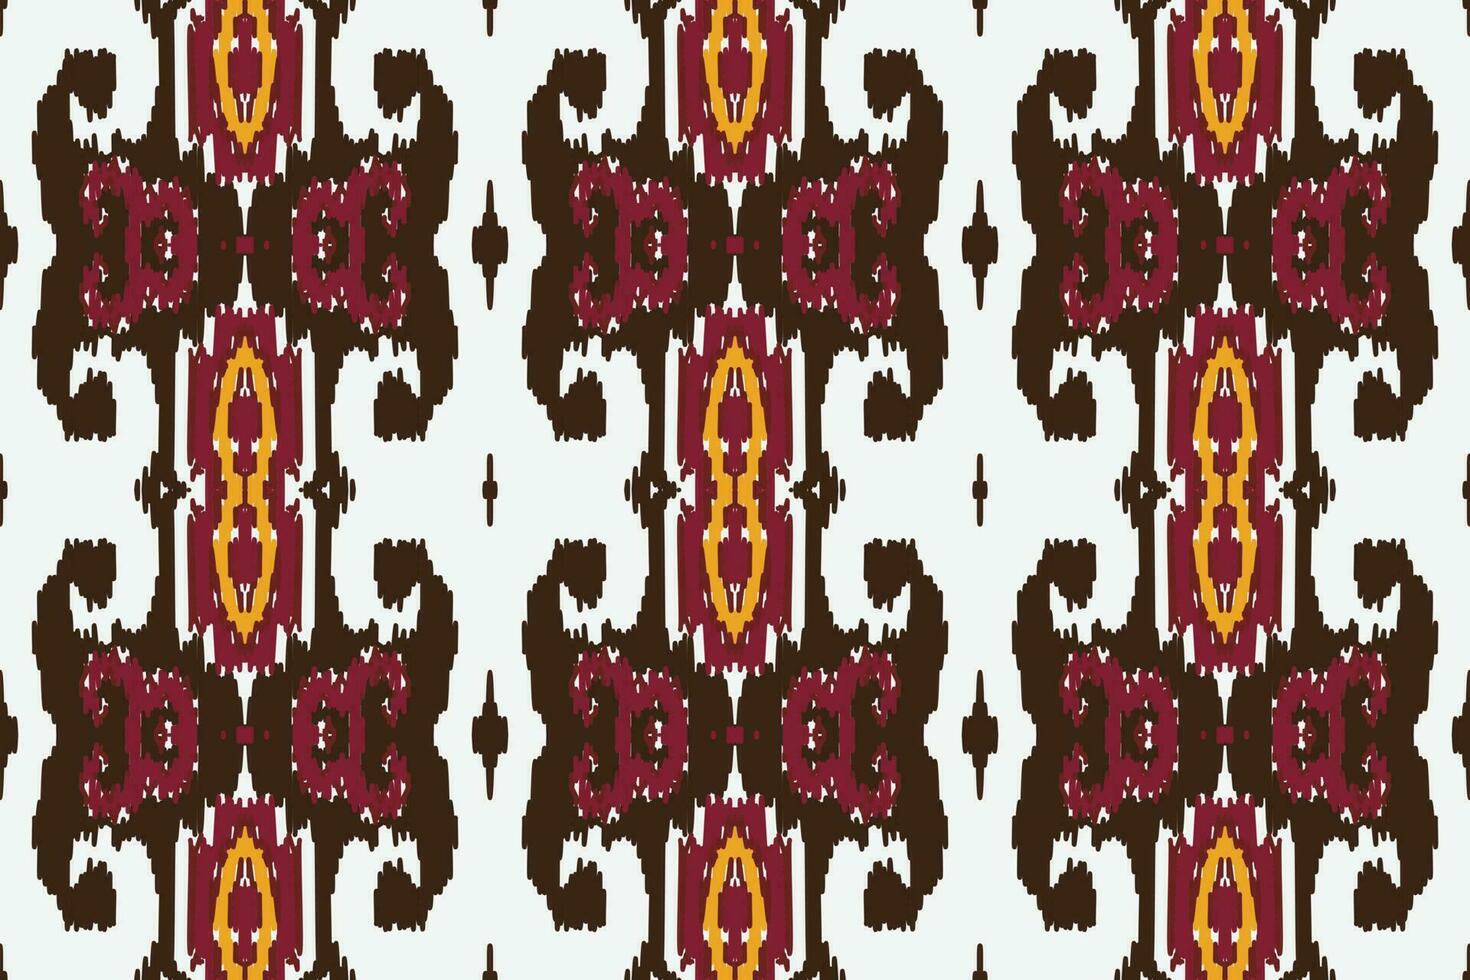 motivo ikat floral paisley bordado fundo. geométrico étnico oriental padronizar tradicional. ikat asteca estilo abstrato vetor ilustração. Projeto para impressão textura, tecido, saree, sari, tapete.